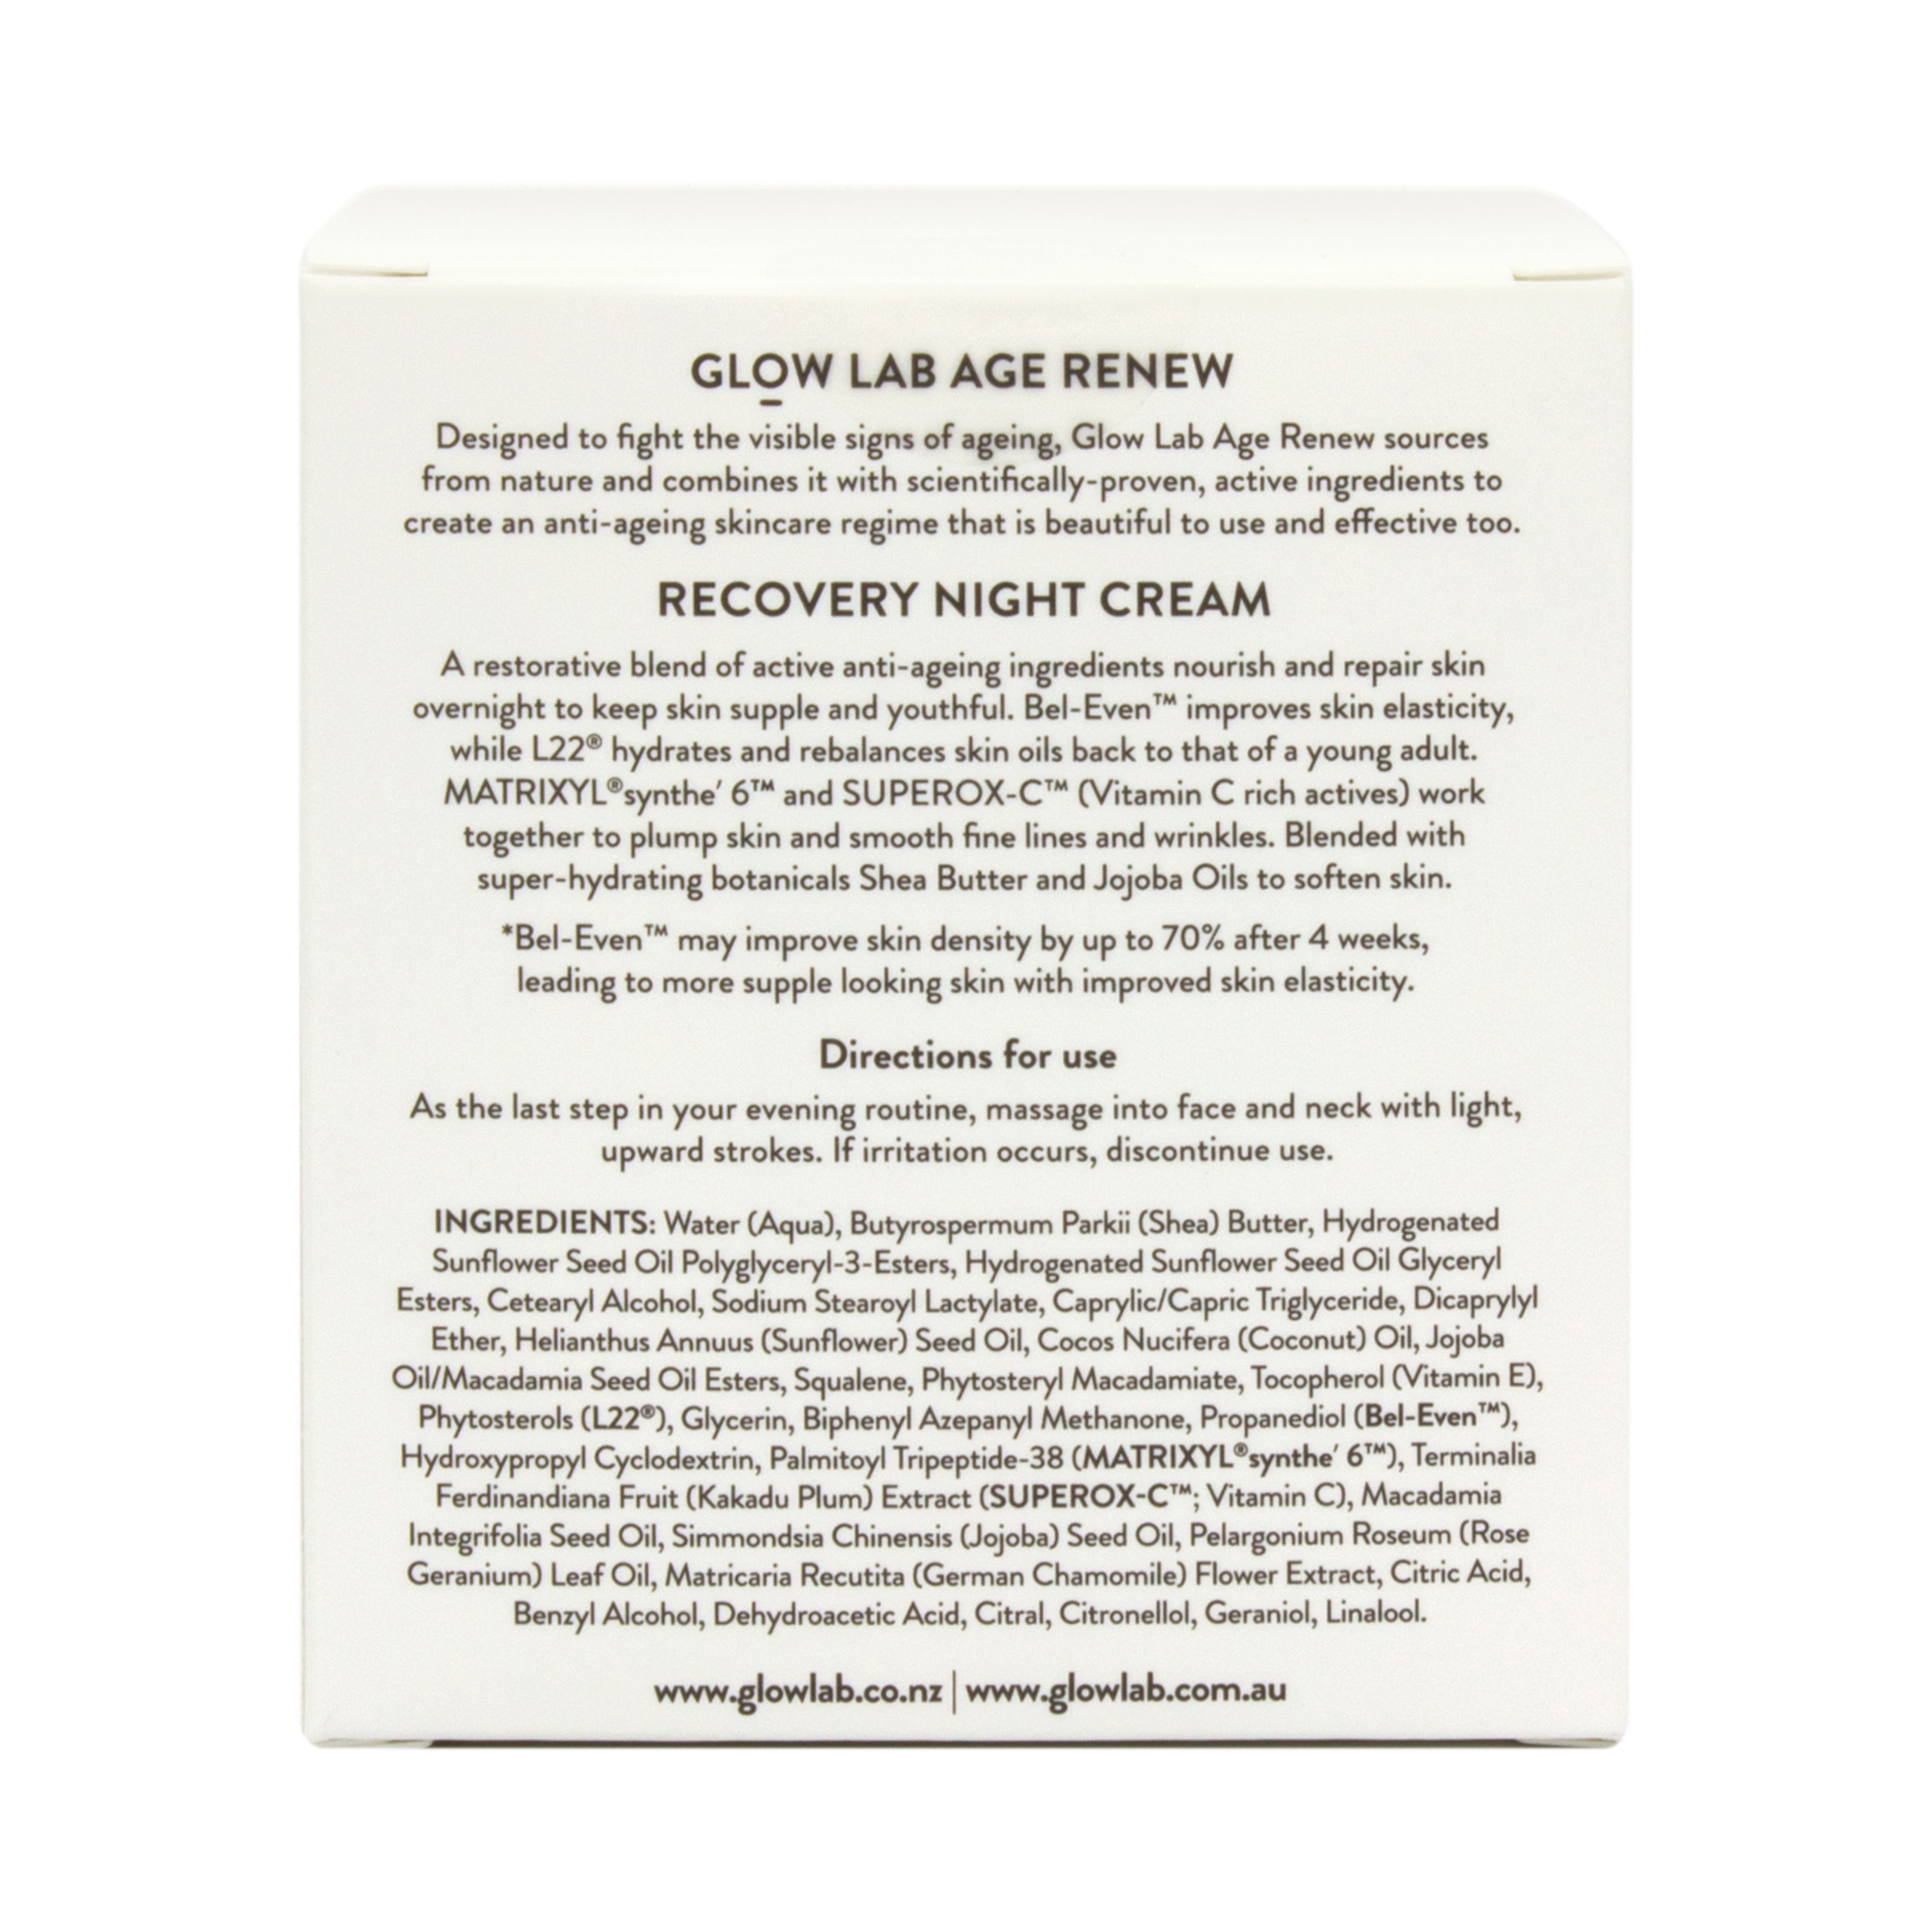 Age Renew Recovery Night Cream